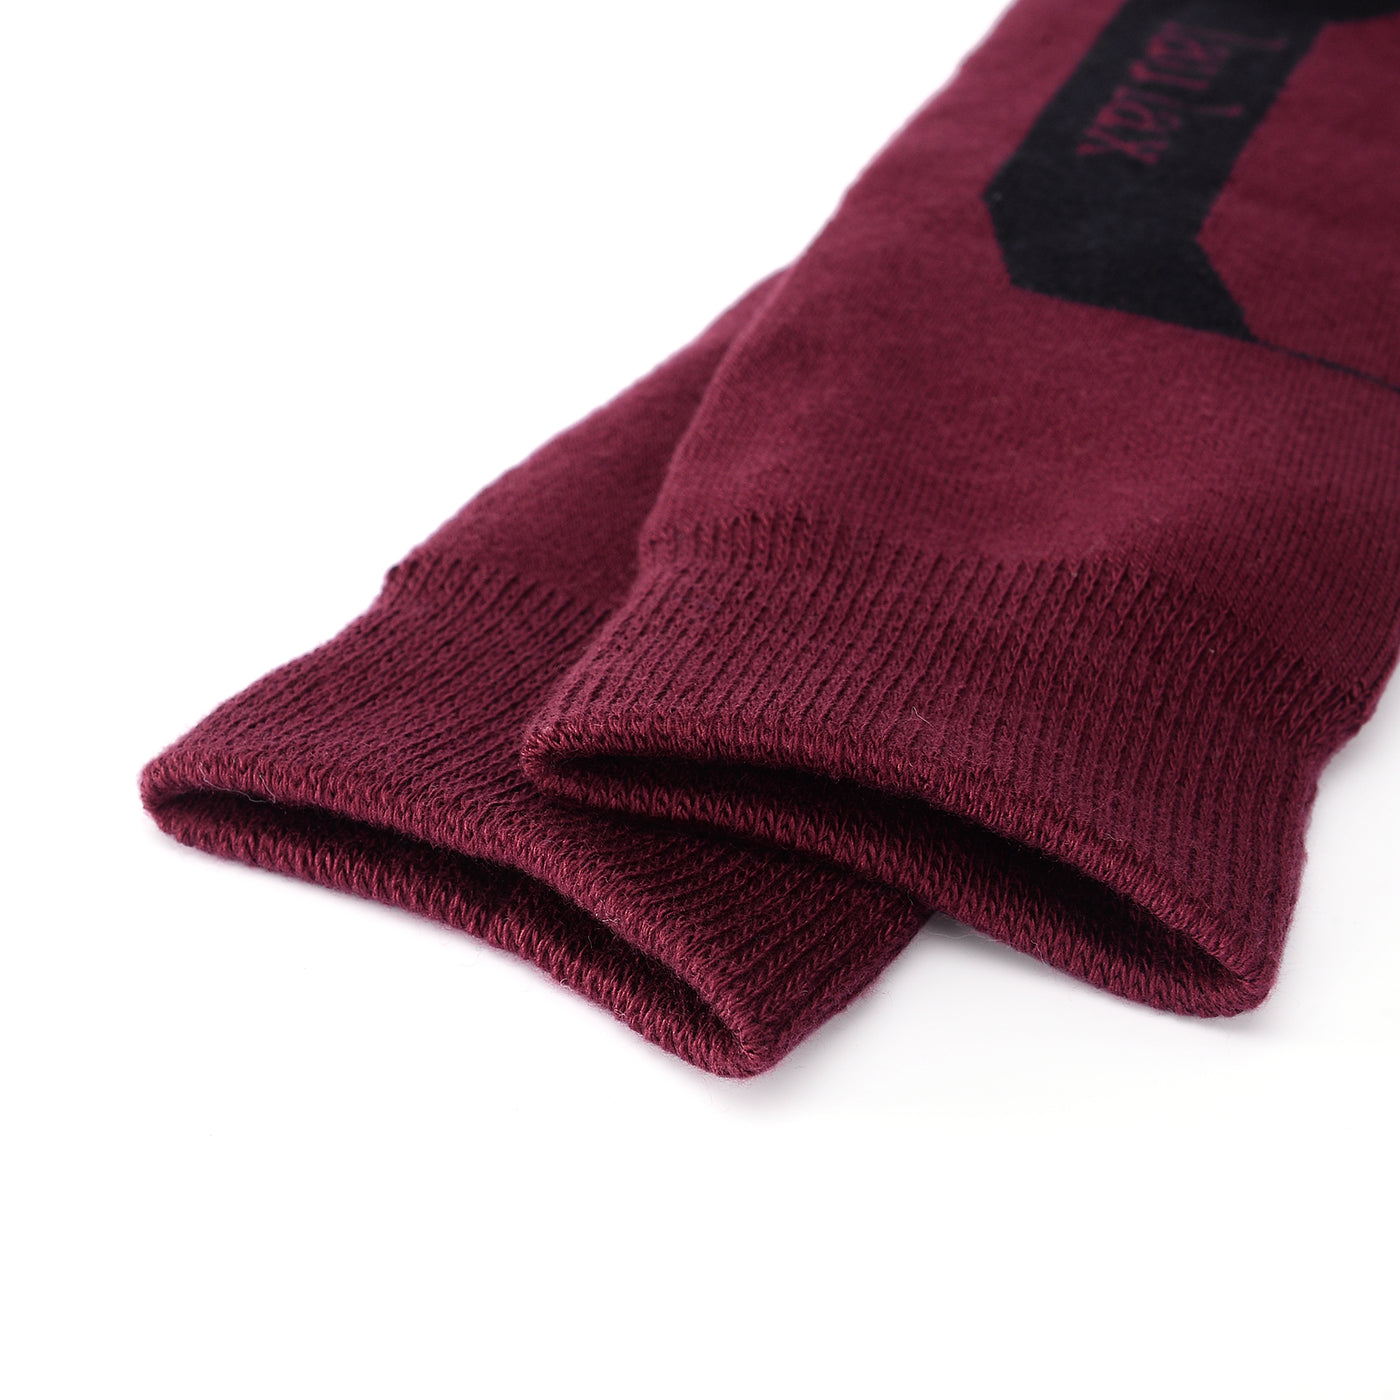 Laulax Men's Cashmere-like Soft Thermal Winter Ski Socks, Size 7 - 11